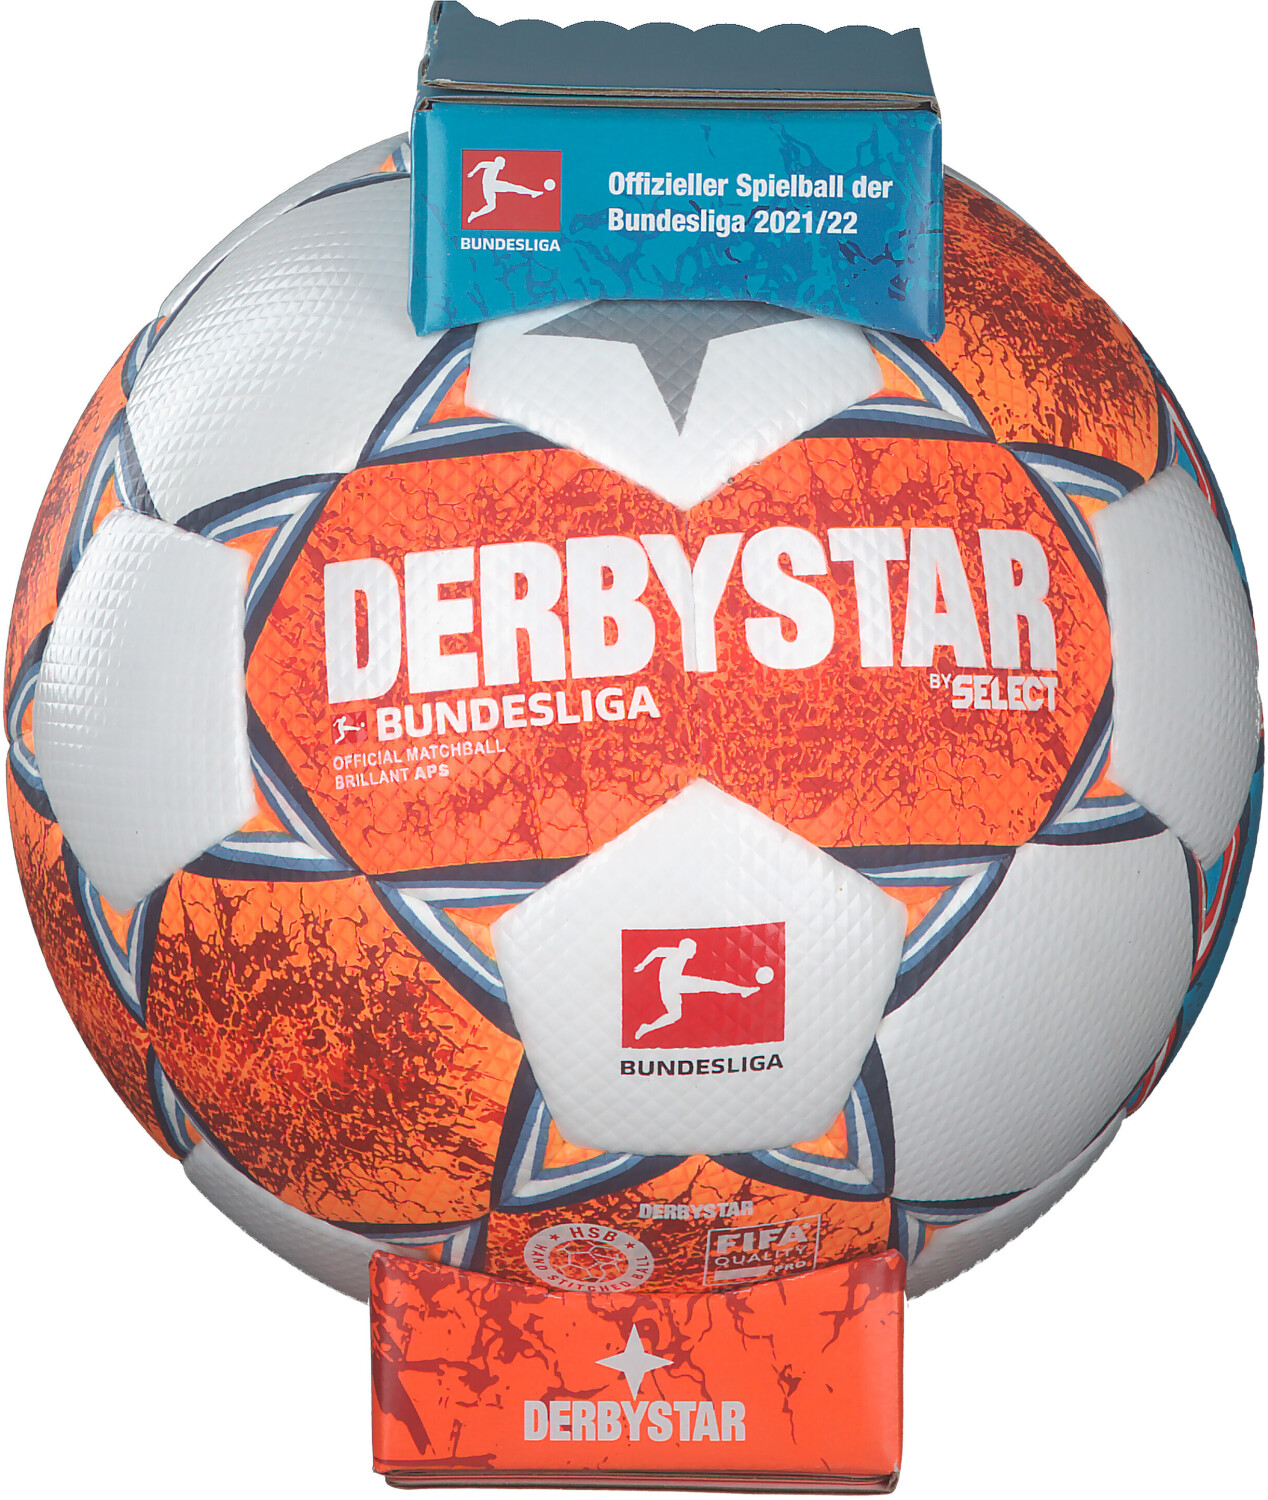 Derbystar Bundesliga Brilliant | APS 84,90 V21 € Preisvergleich ab bei